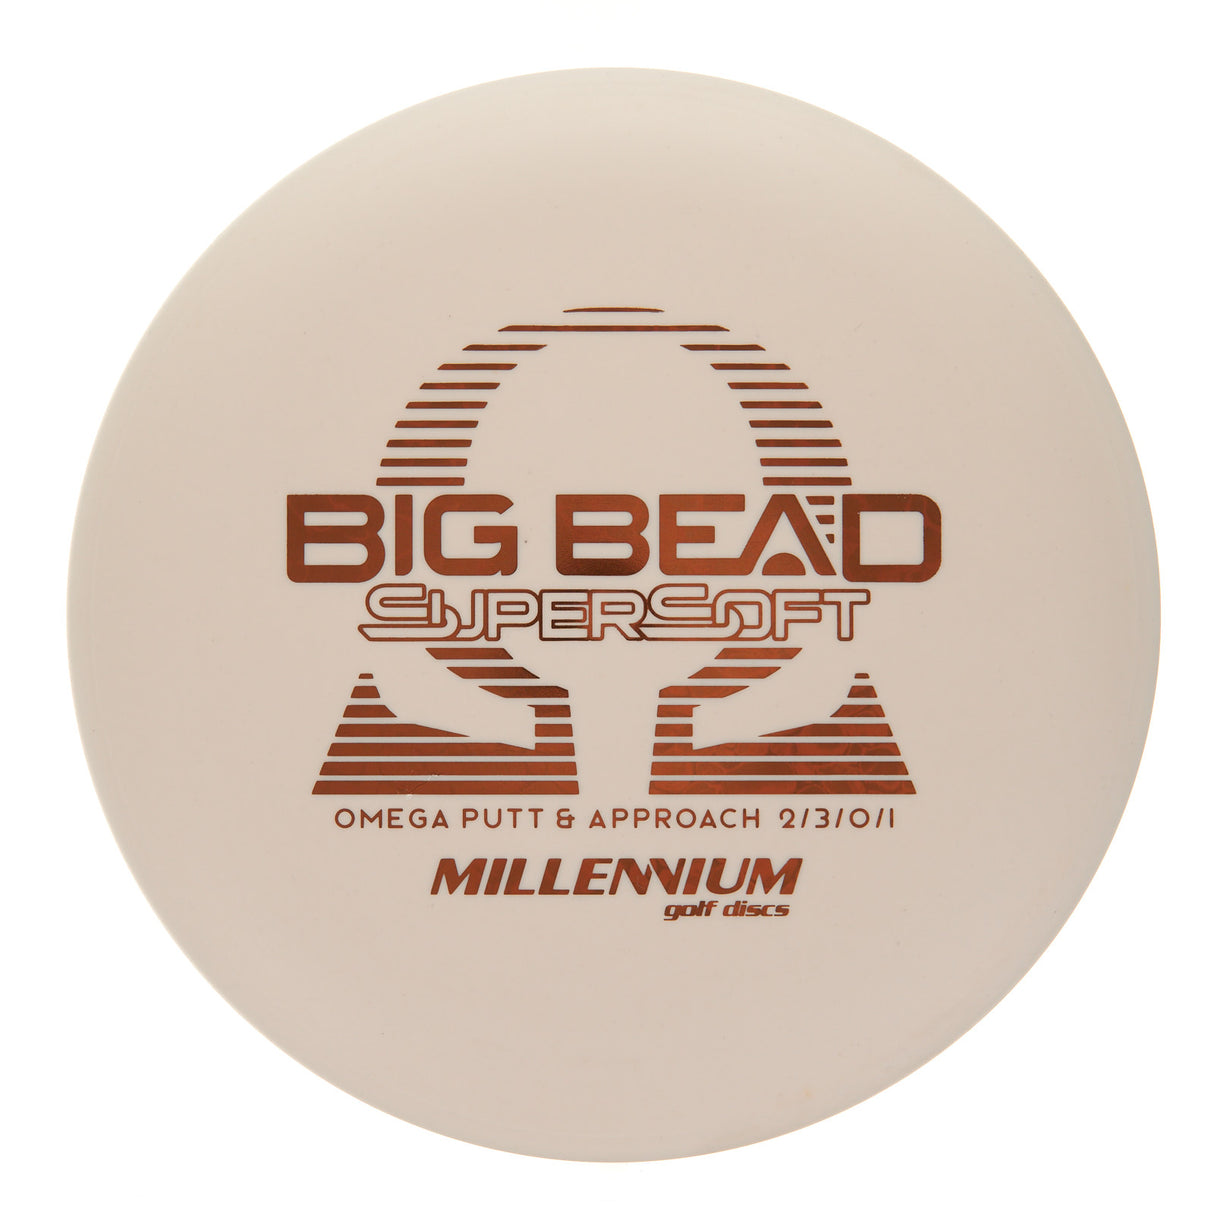 Millennium Omega Big Bead - SuperSoft 173g | Style 0001